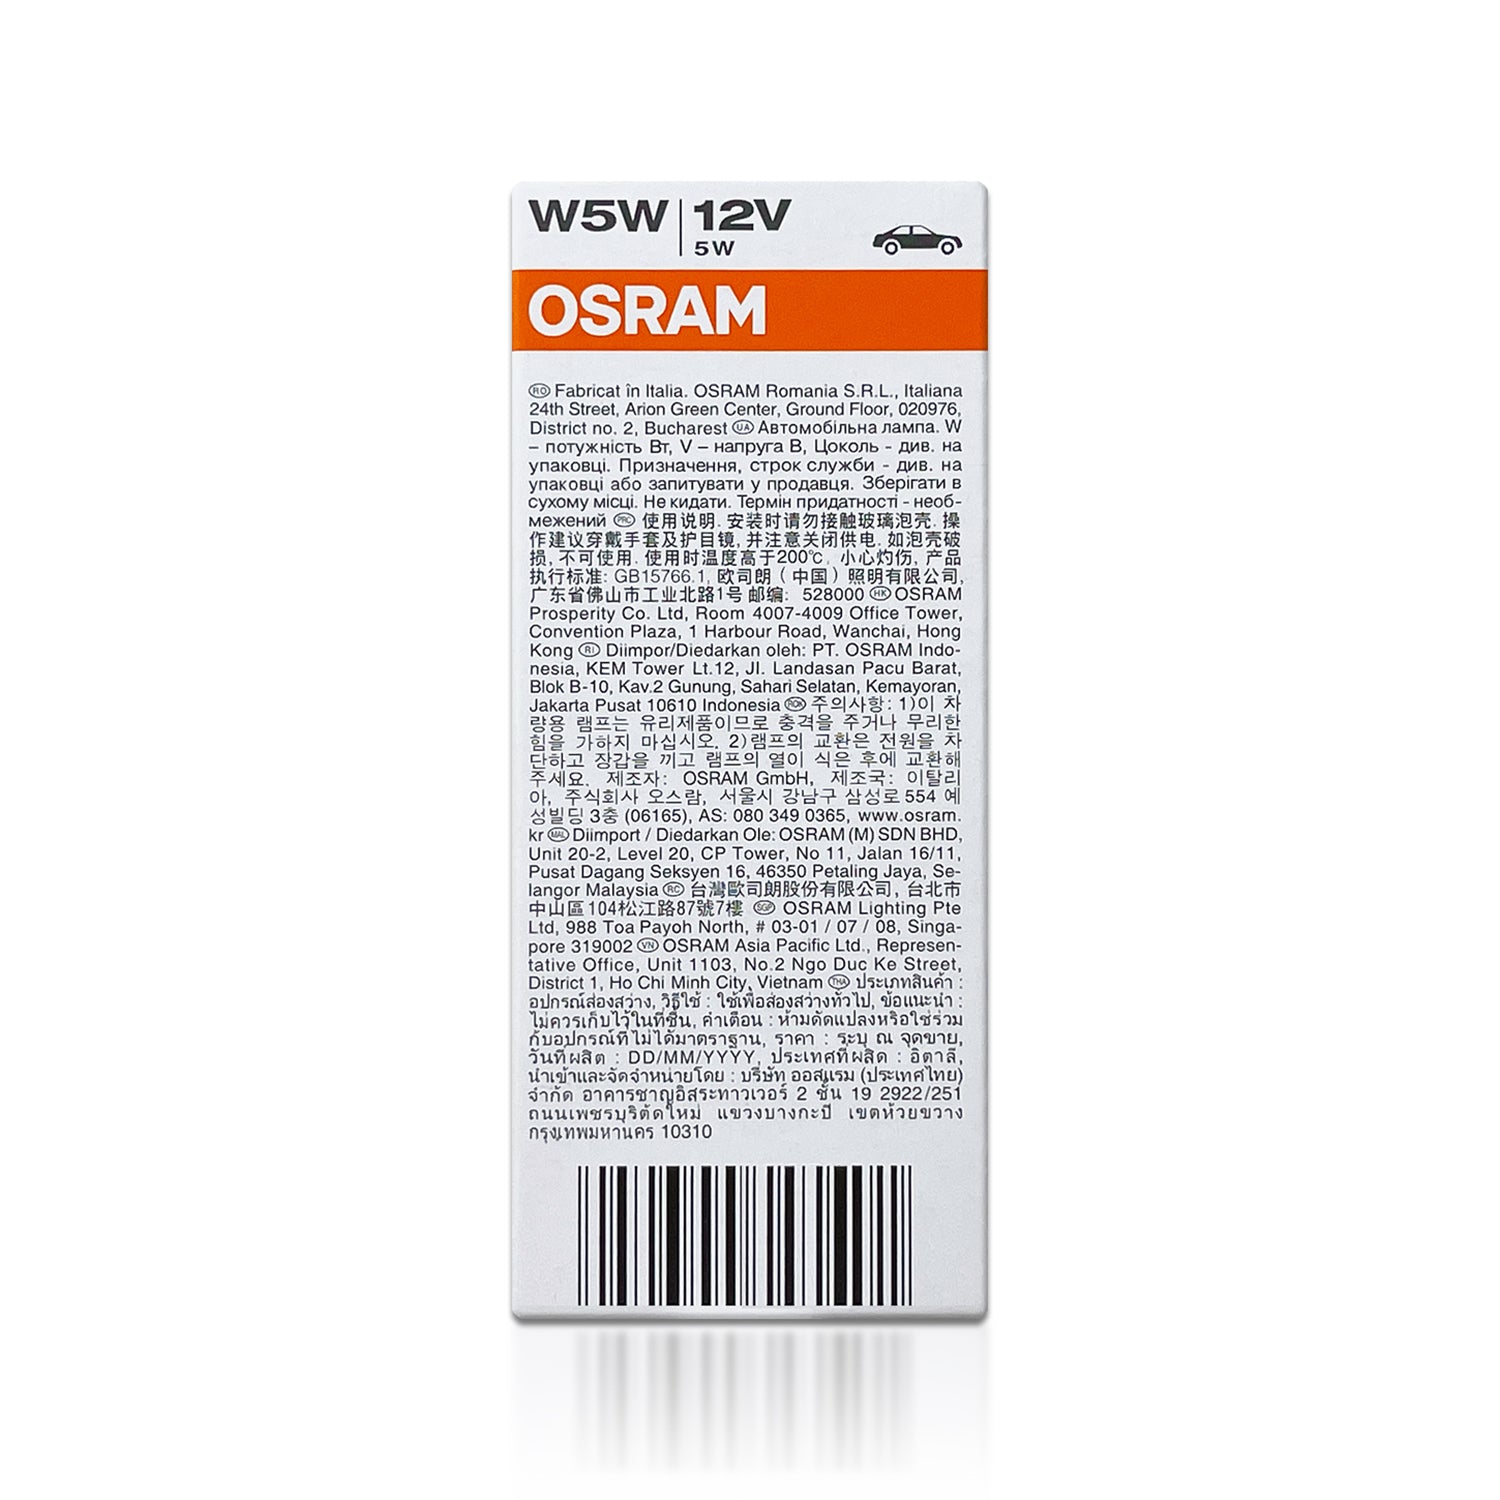 194 T10 Osram W5W Standard White Halogen Bulbs